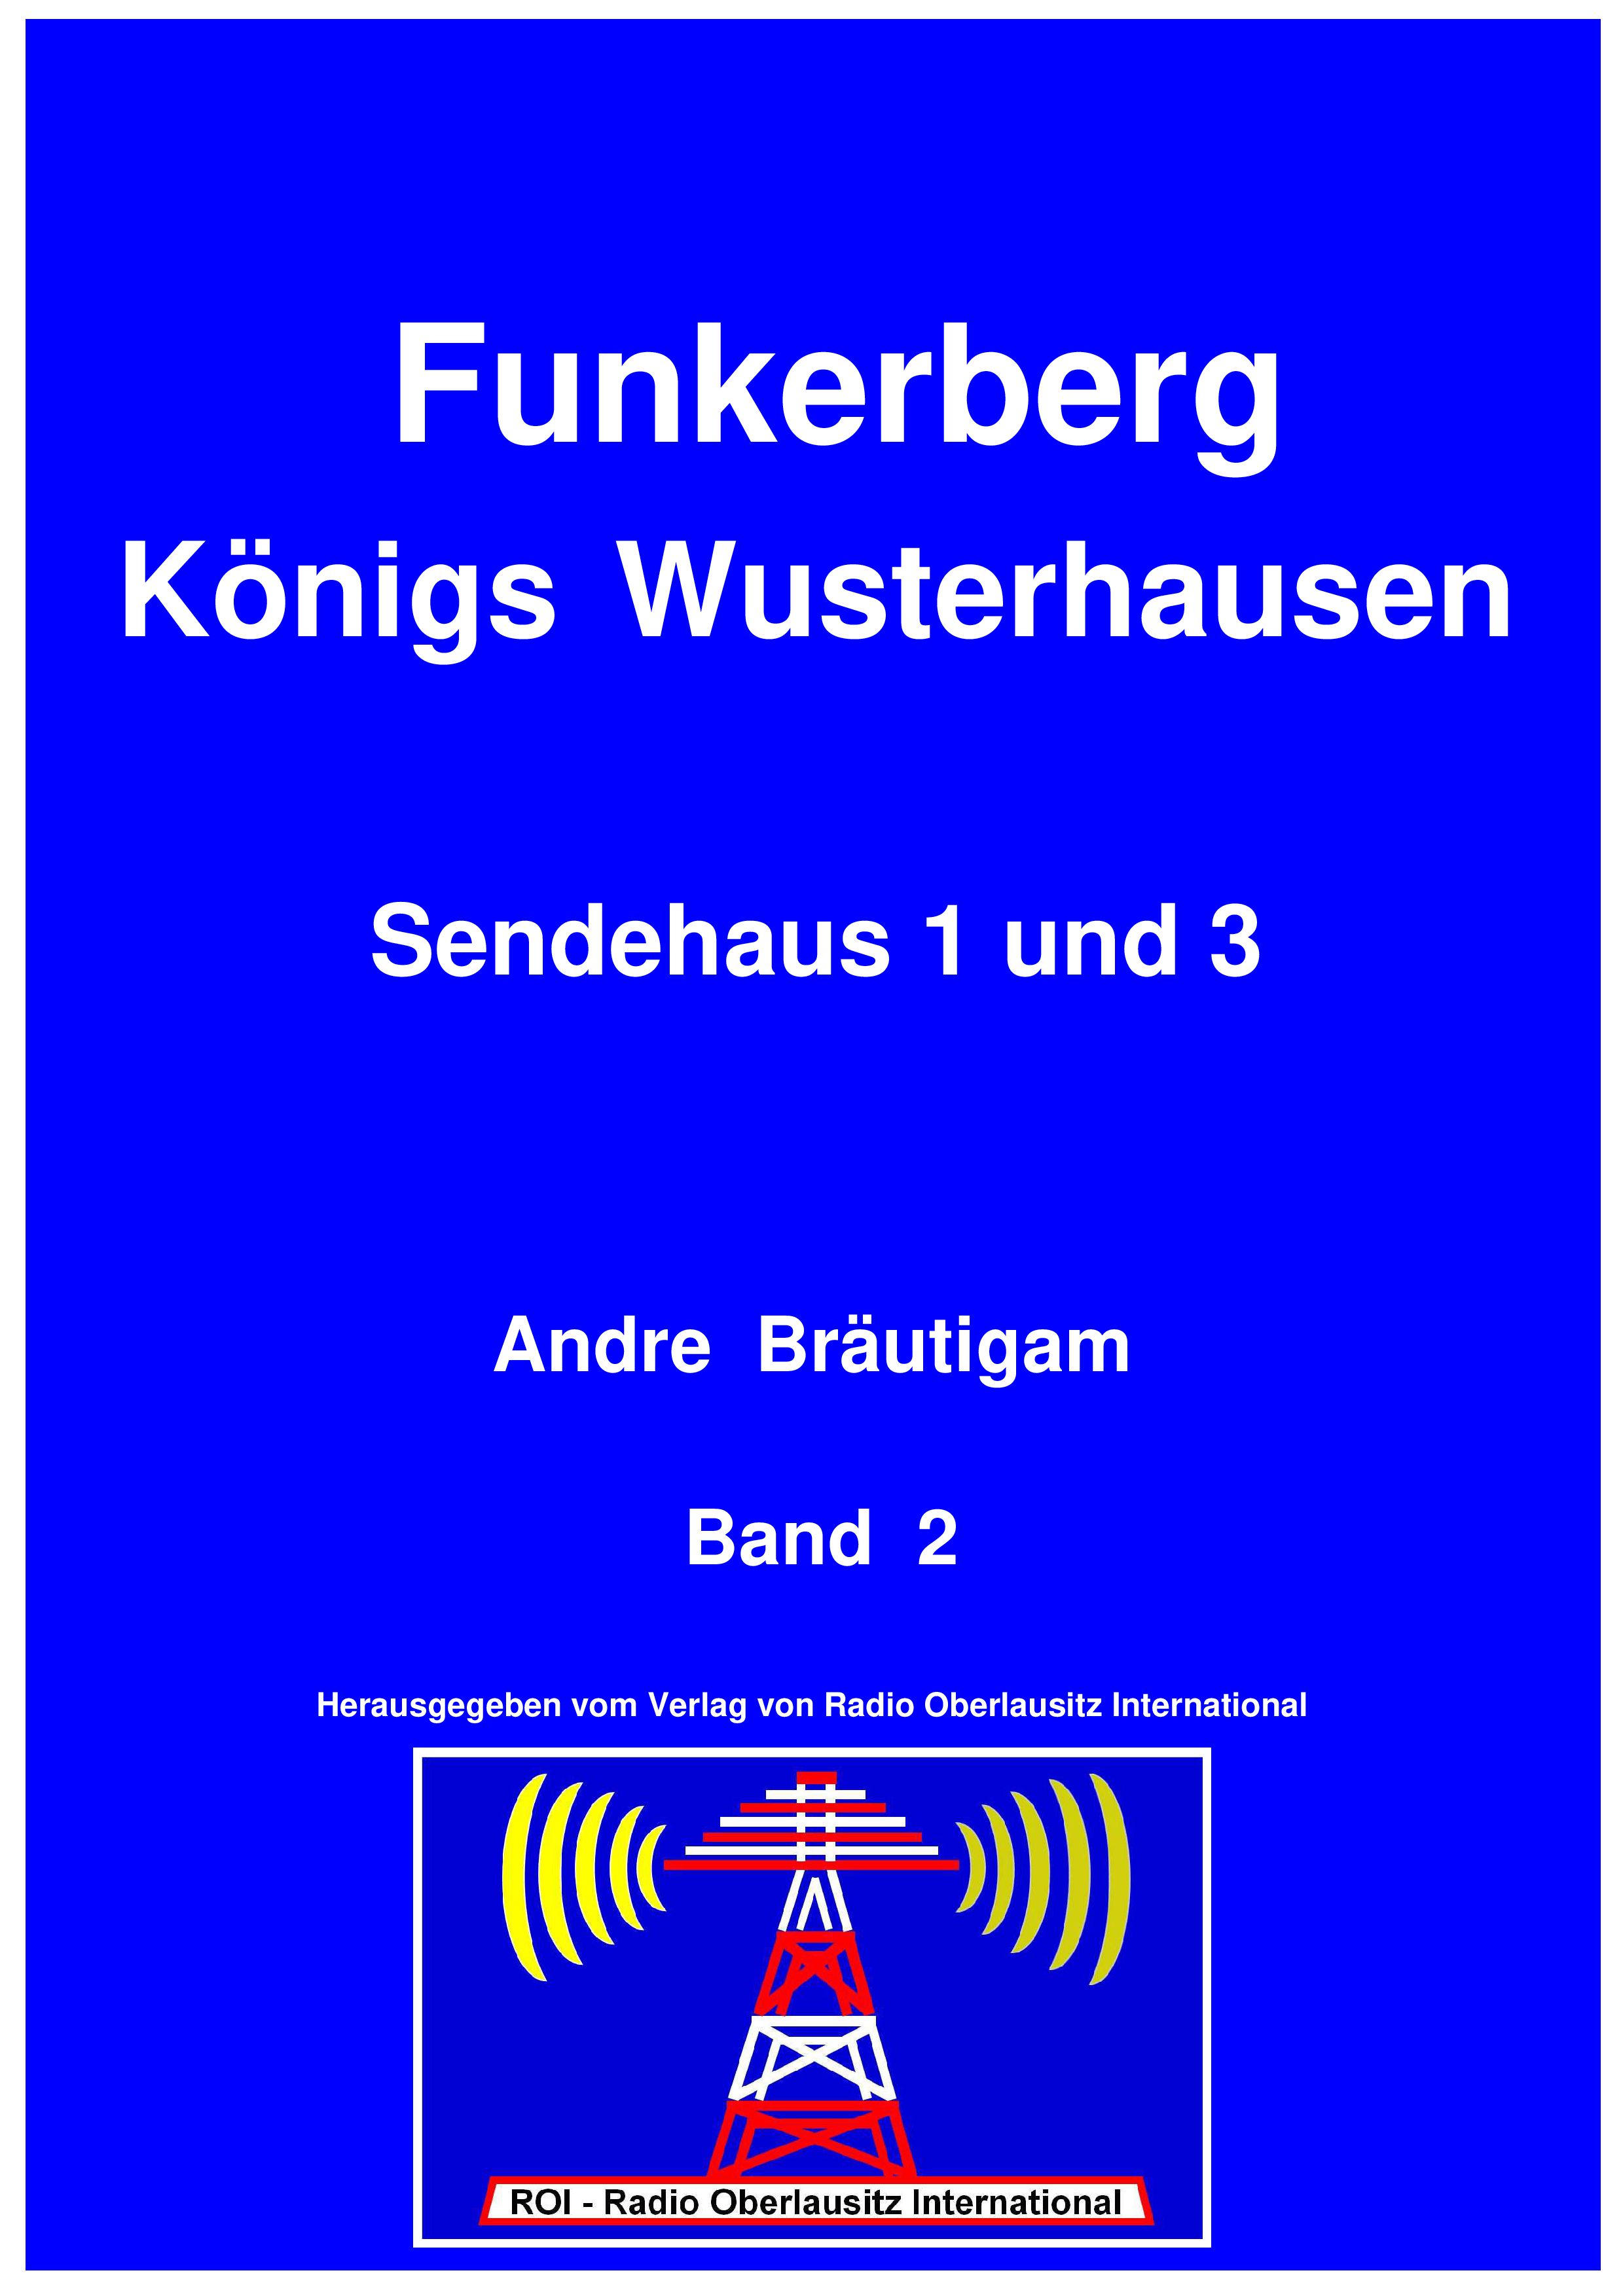 Funkerberg Königs Wusterhausen Sendehaus 1 und 3